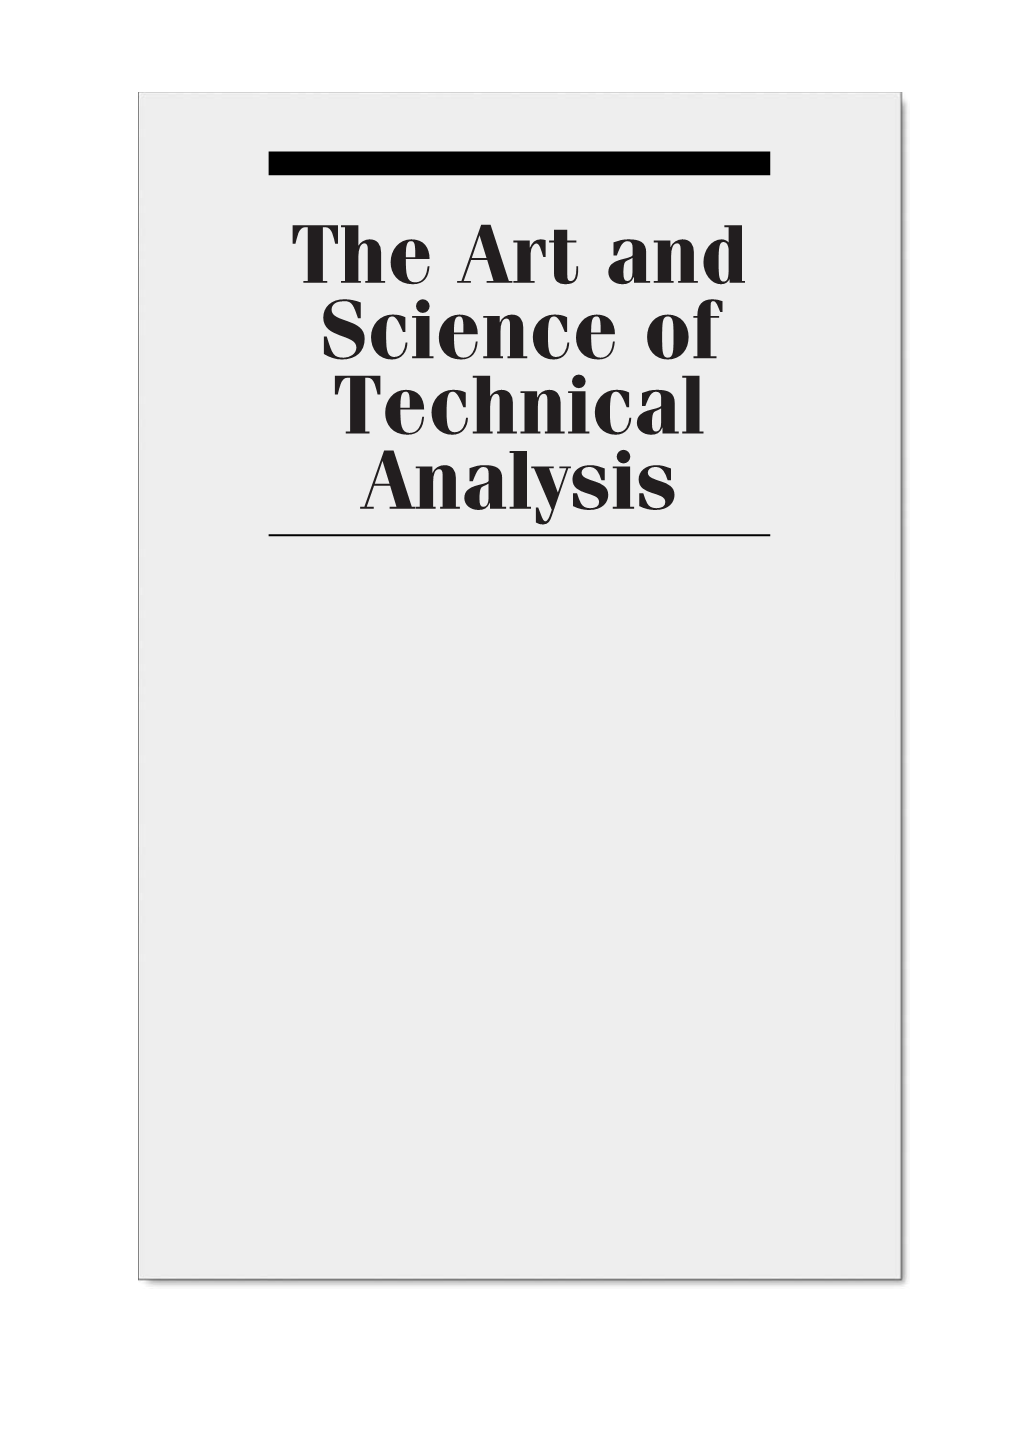 The Art and Science of Technical Analysis P1: OTA/XYZ P2: ABC JWBT634-Fm JWBT634-Grimes May 11, 2012 8:28 Printer: Hamilton Printing